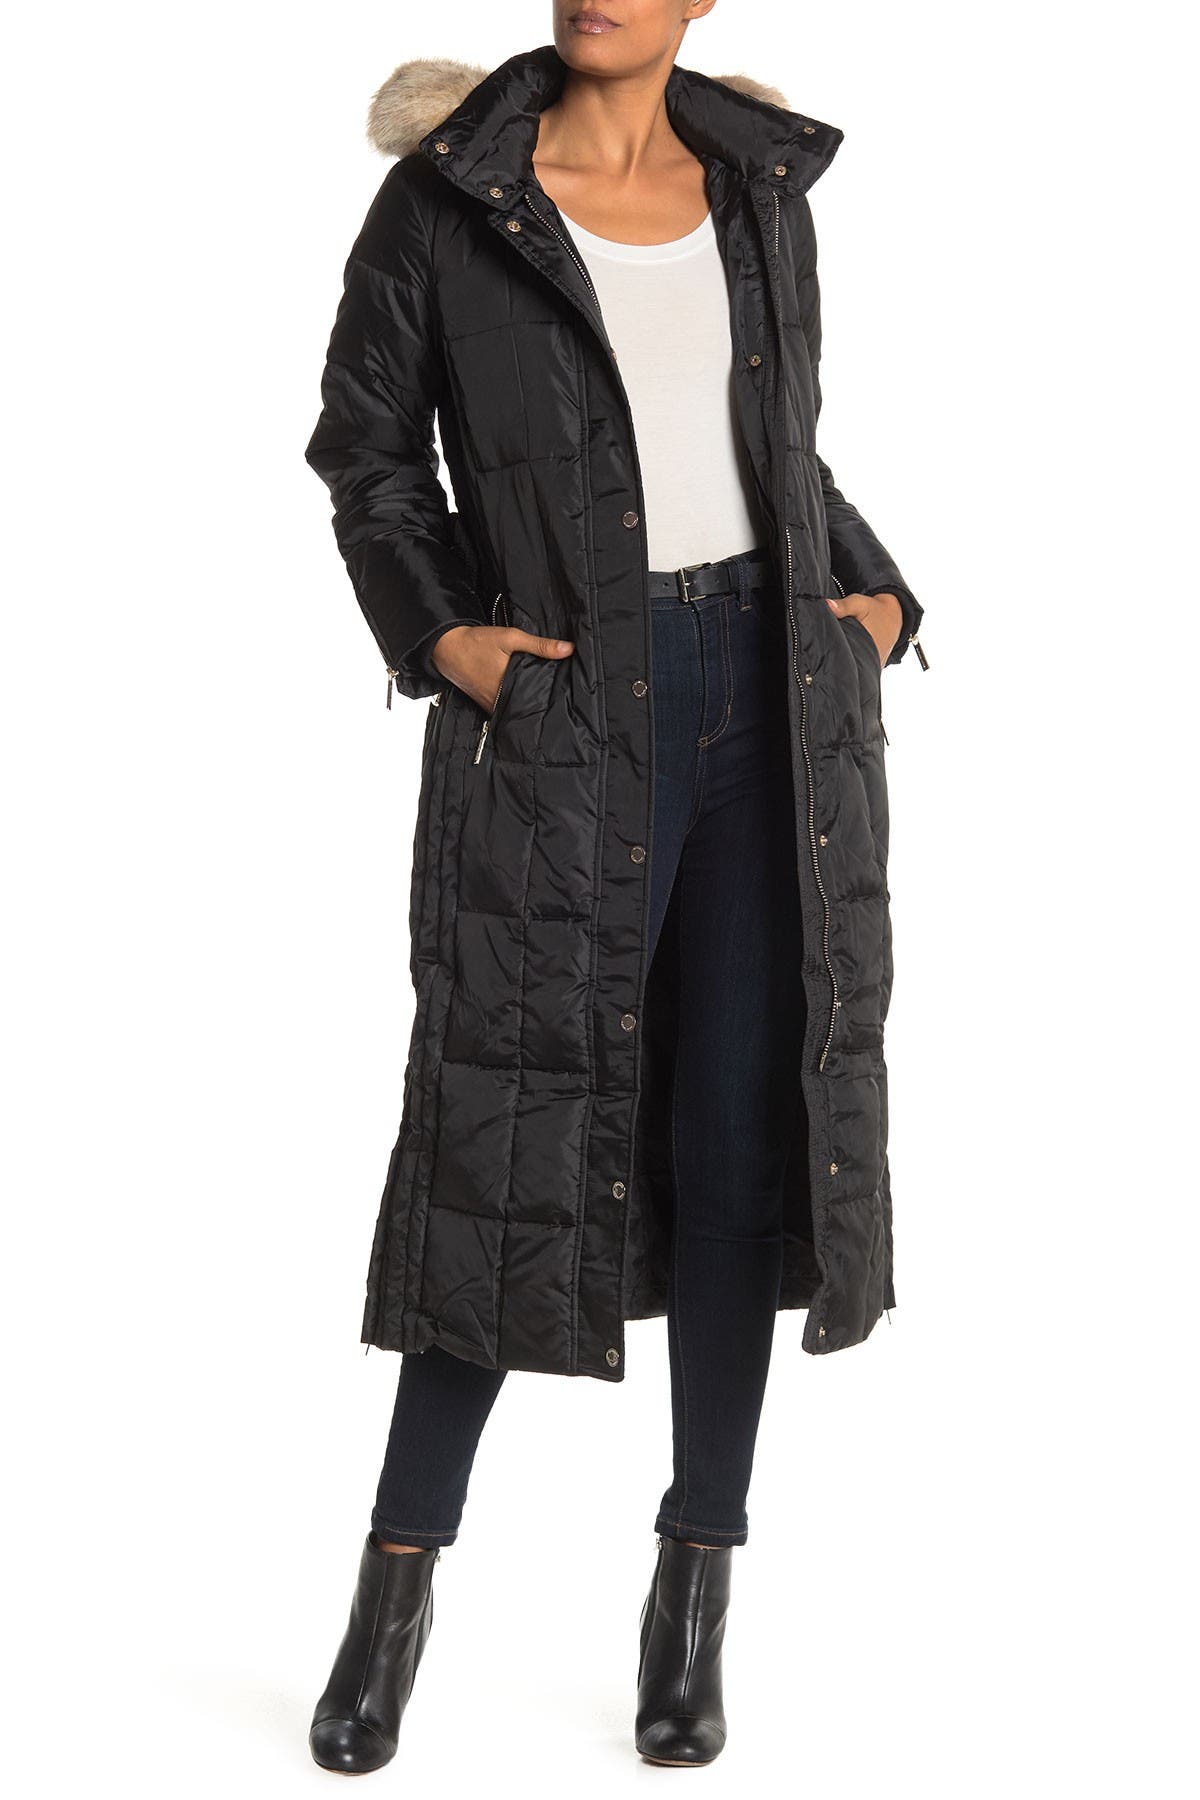 michael kors faux fur hooded coat